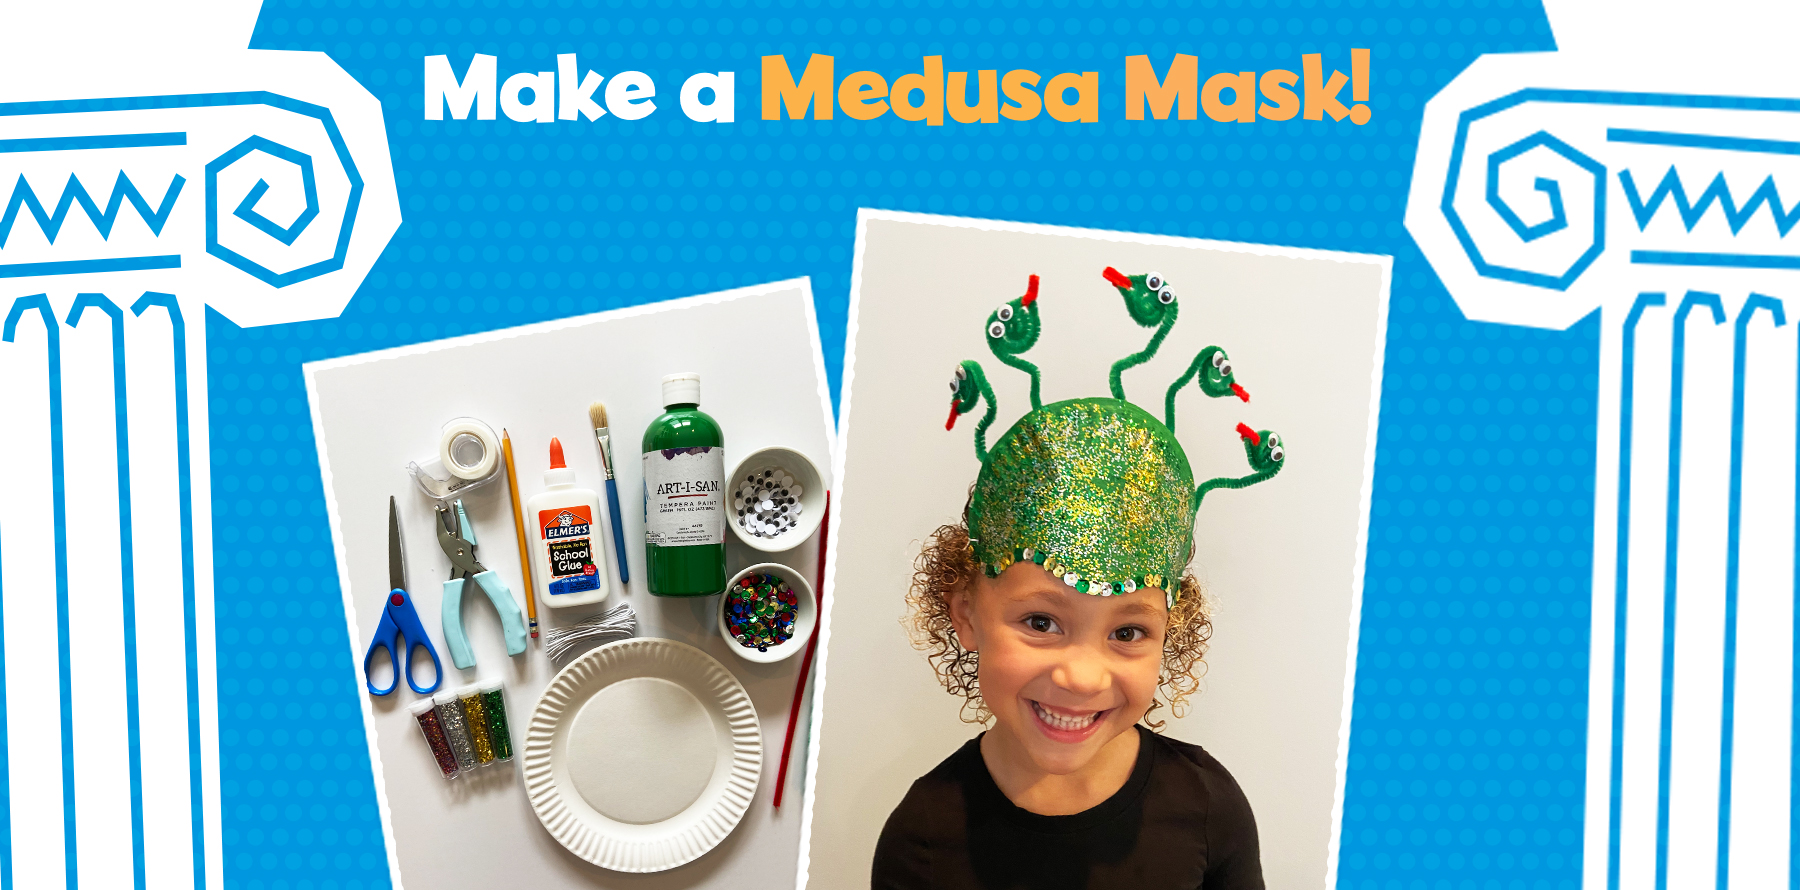 Make a Medusa mask with Little Passports